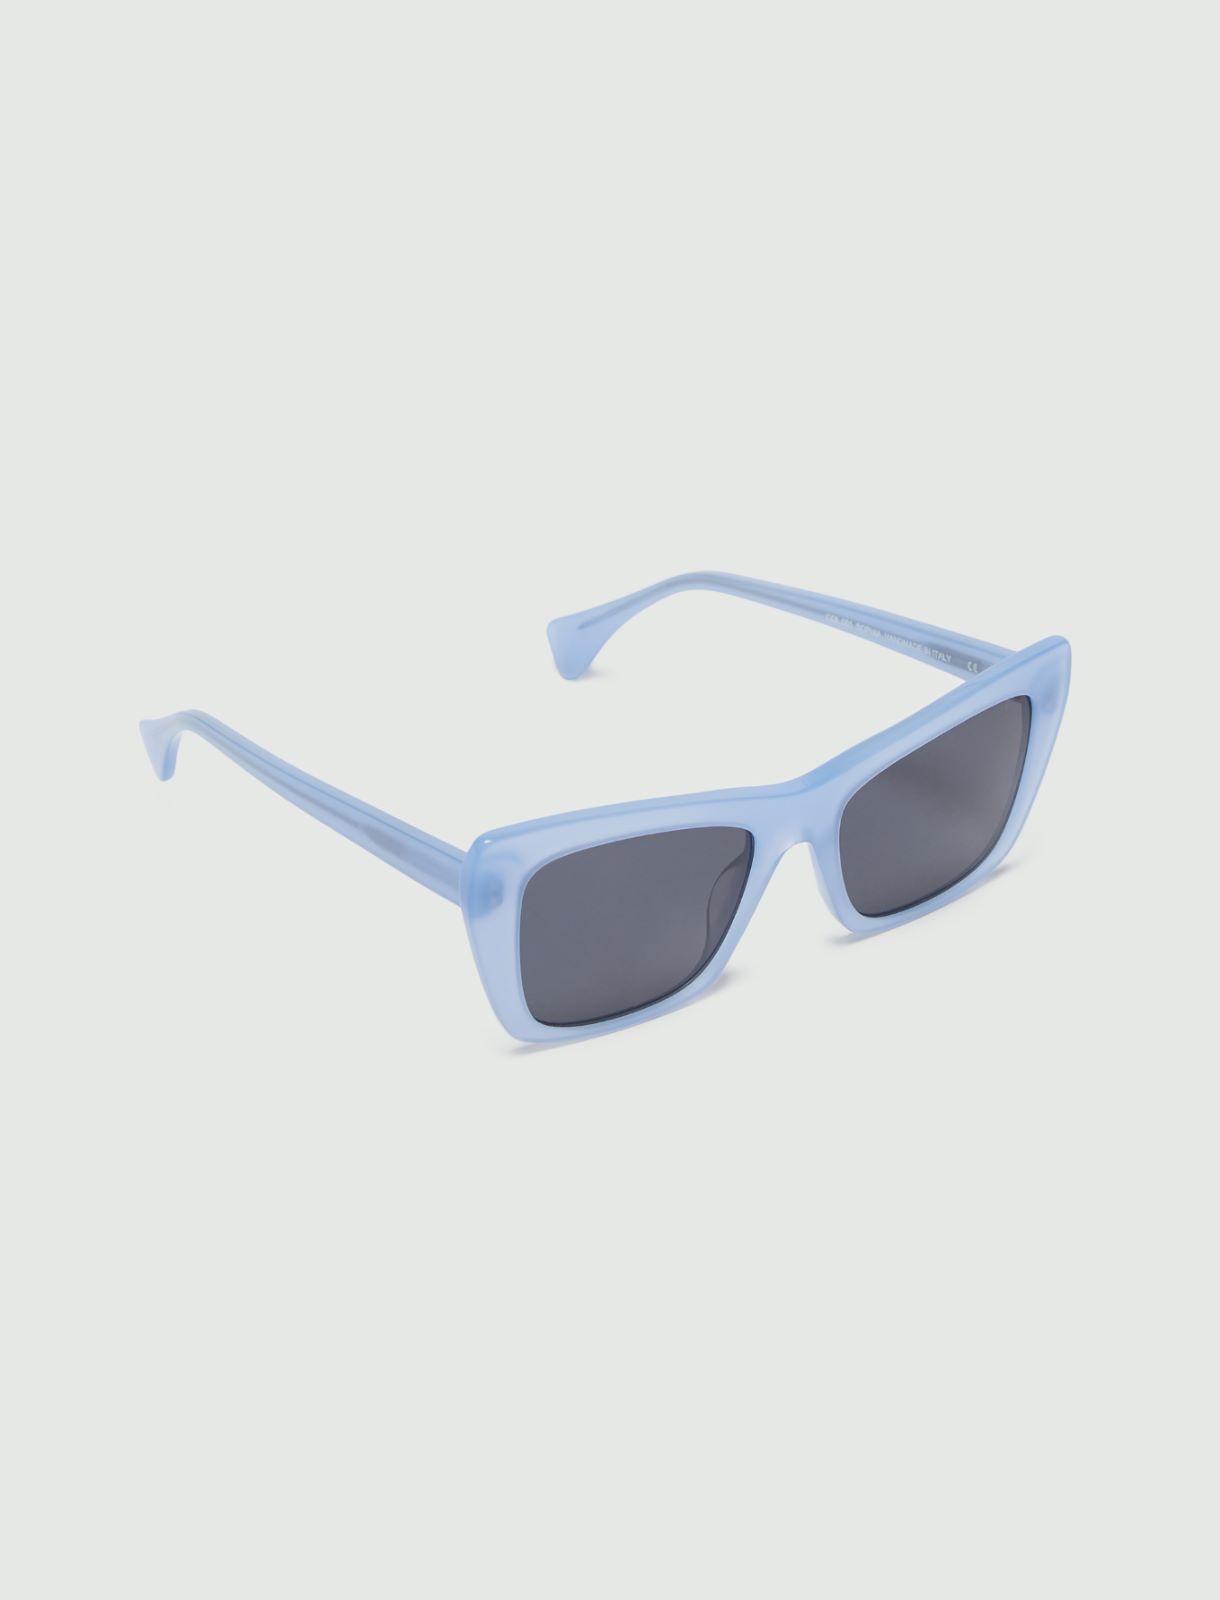 Cat-Eye-Sonnenbrille - Azurblau - Marella - 2